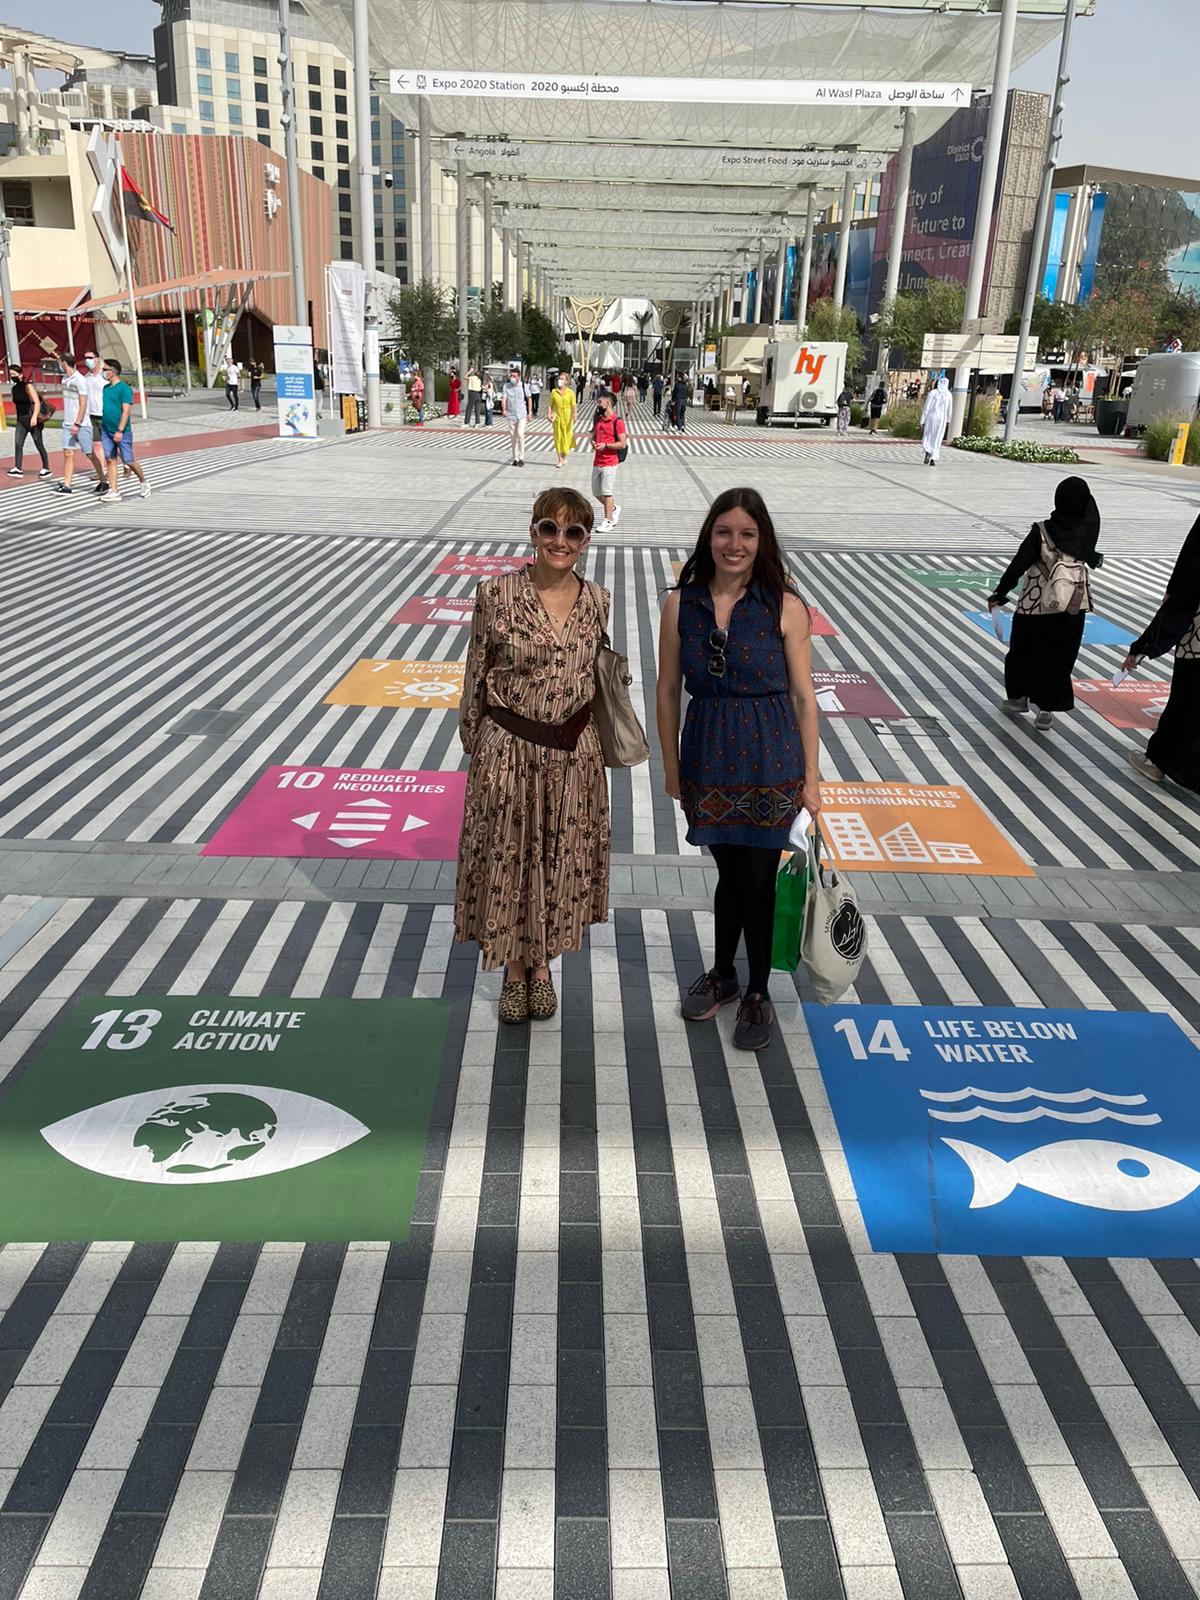 Annalisa Bracco (left) and Élise Beaudin at the World Expo in Dubai. (Photo: Annalisa Bracco)